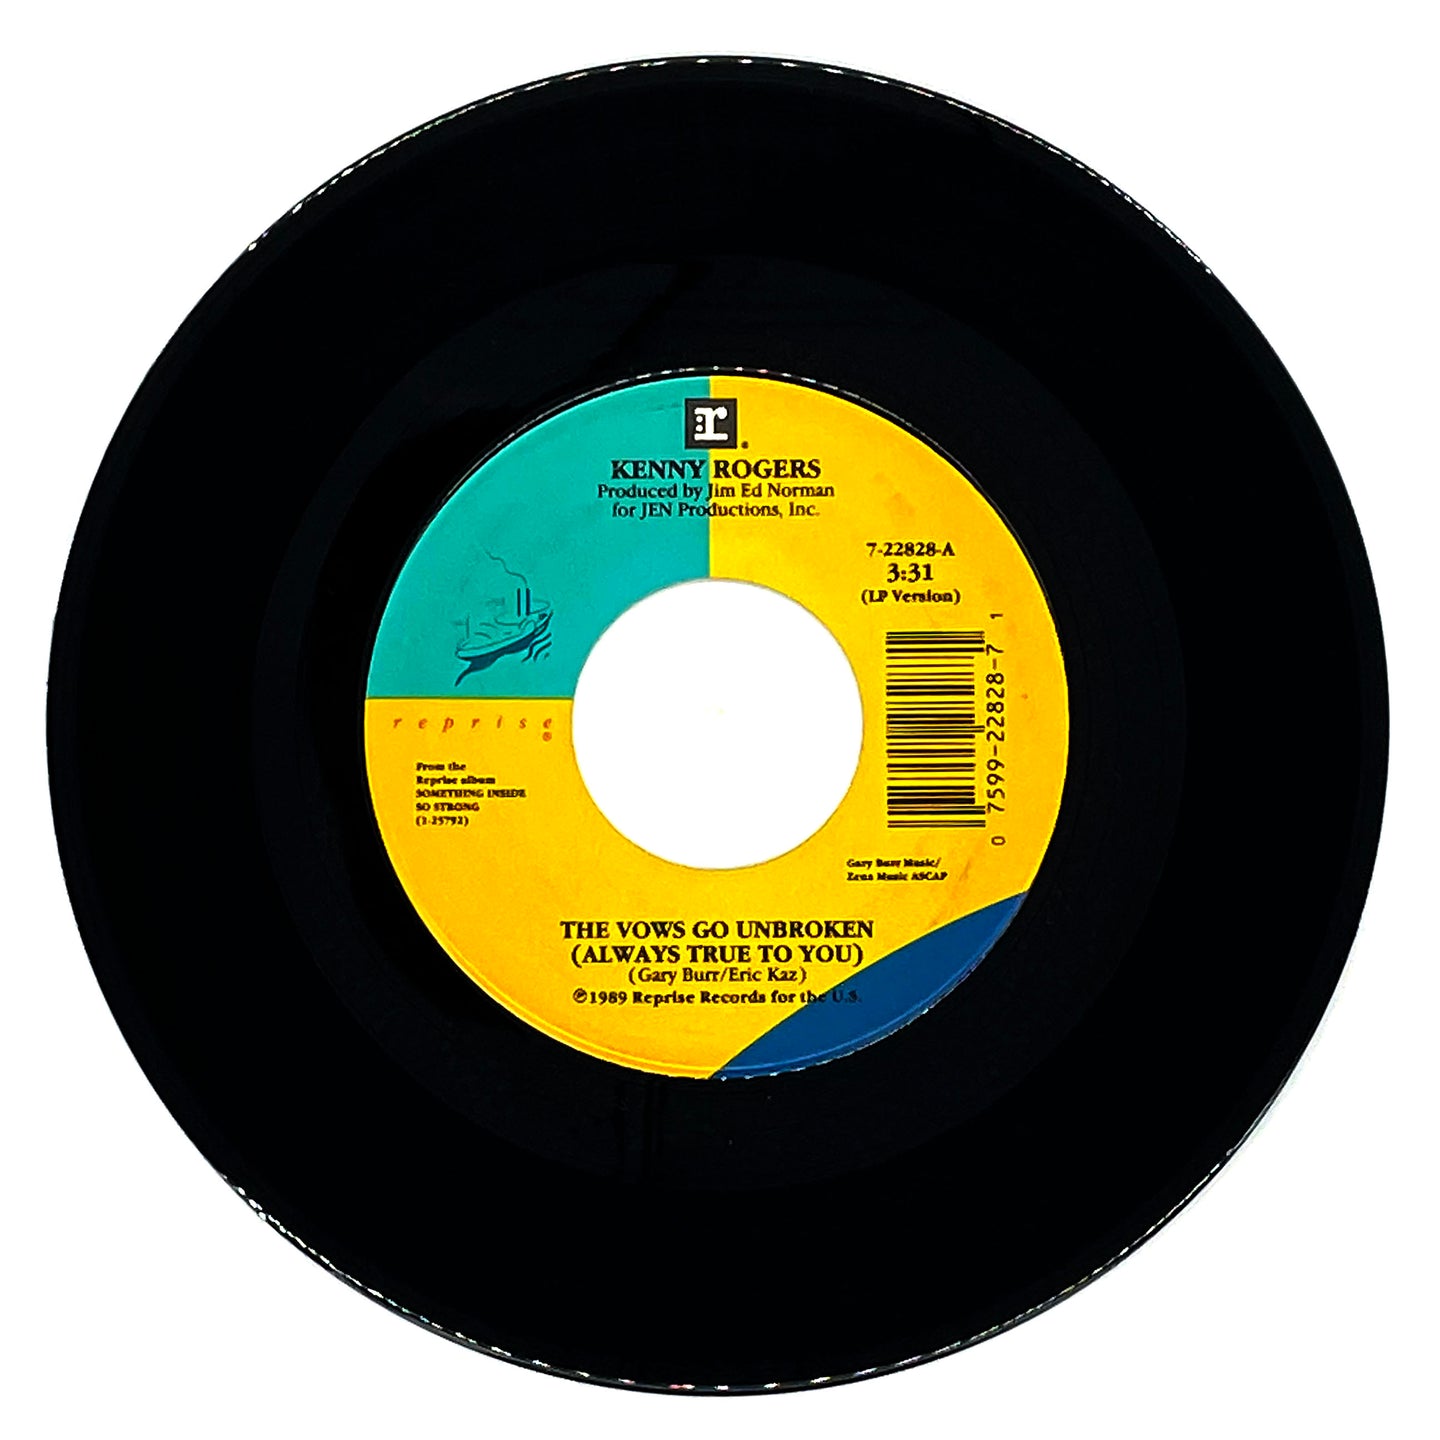 Kenny Rogers : THE VOWS GO UNBROKEN (ALWAYS TRUE TO YOU) (LP VERSION)/ ONE NIGHT (LP VERSION)